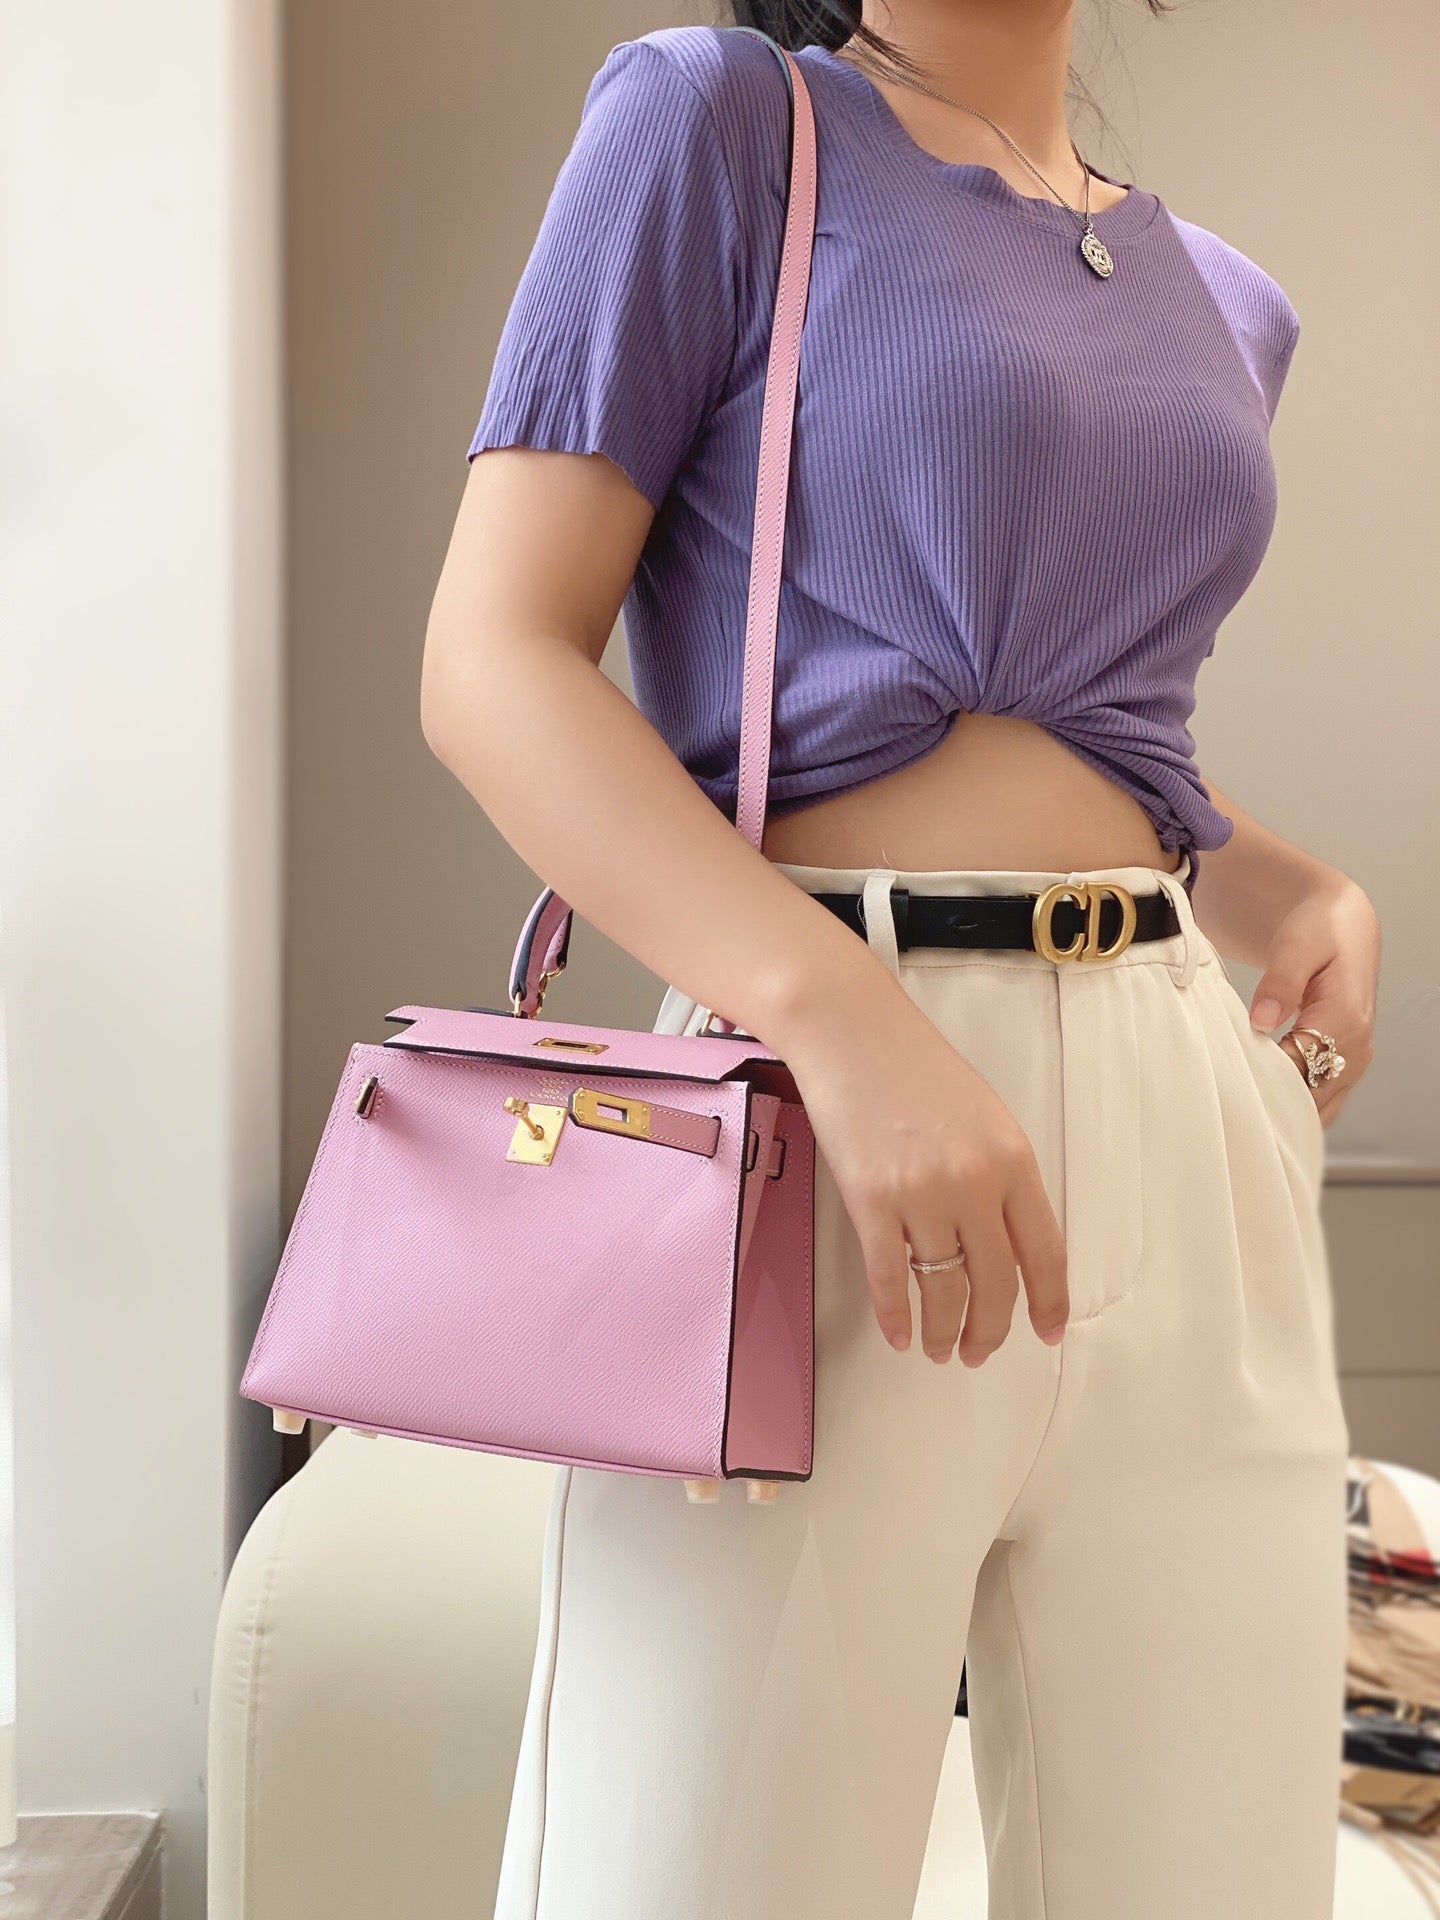 Model carrying a stylish pre-order Kelly Palm Pattern Leather Handbag.